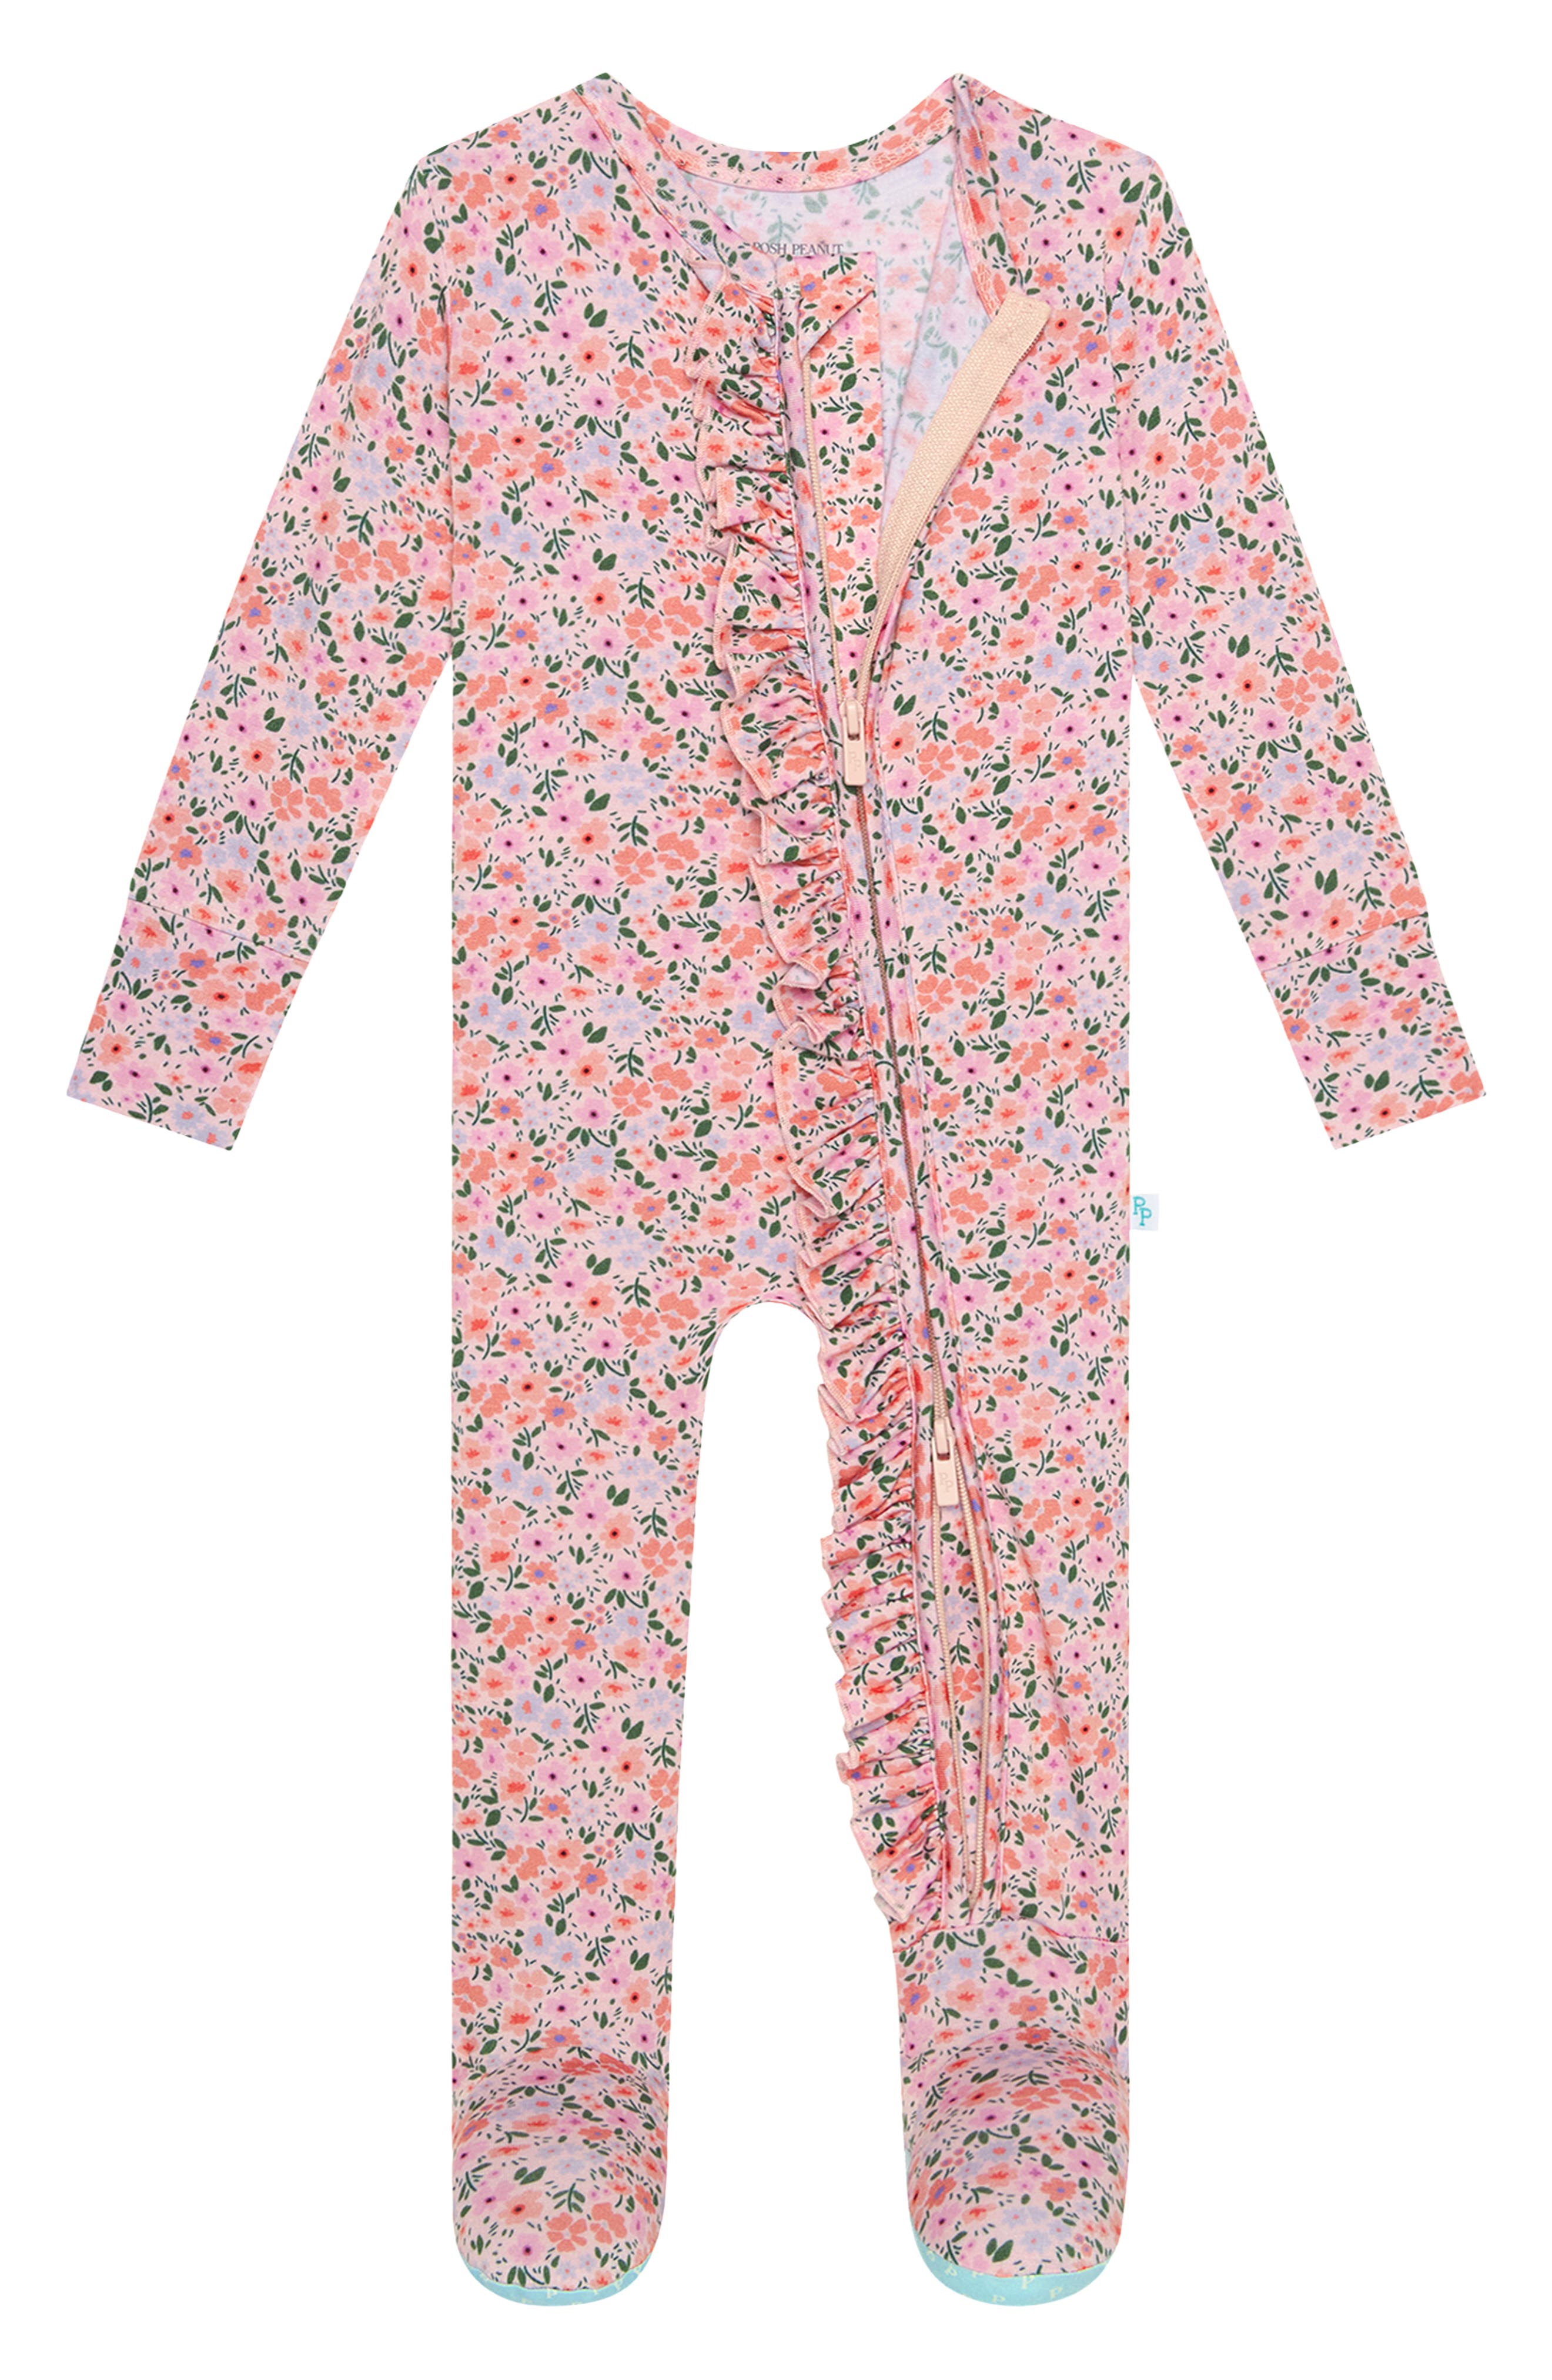 Nordstrom Baby Clothing Loungewear Pajamas Henriette Floral Ruffle Zip Fitted Footie Pajamas in Light/Pastel Orange at Nordstrom 